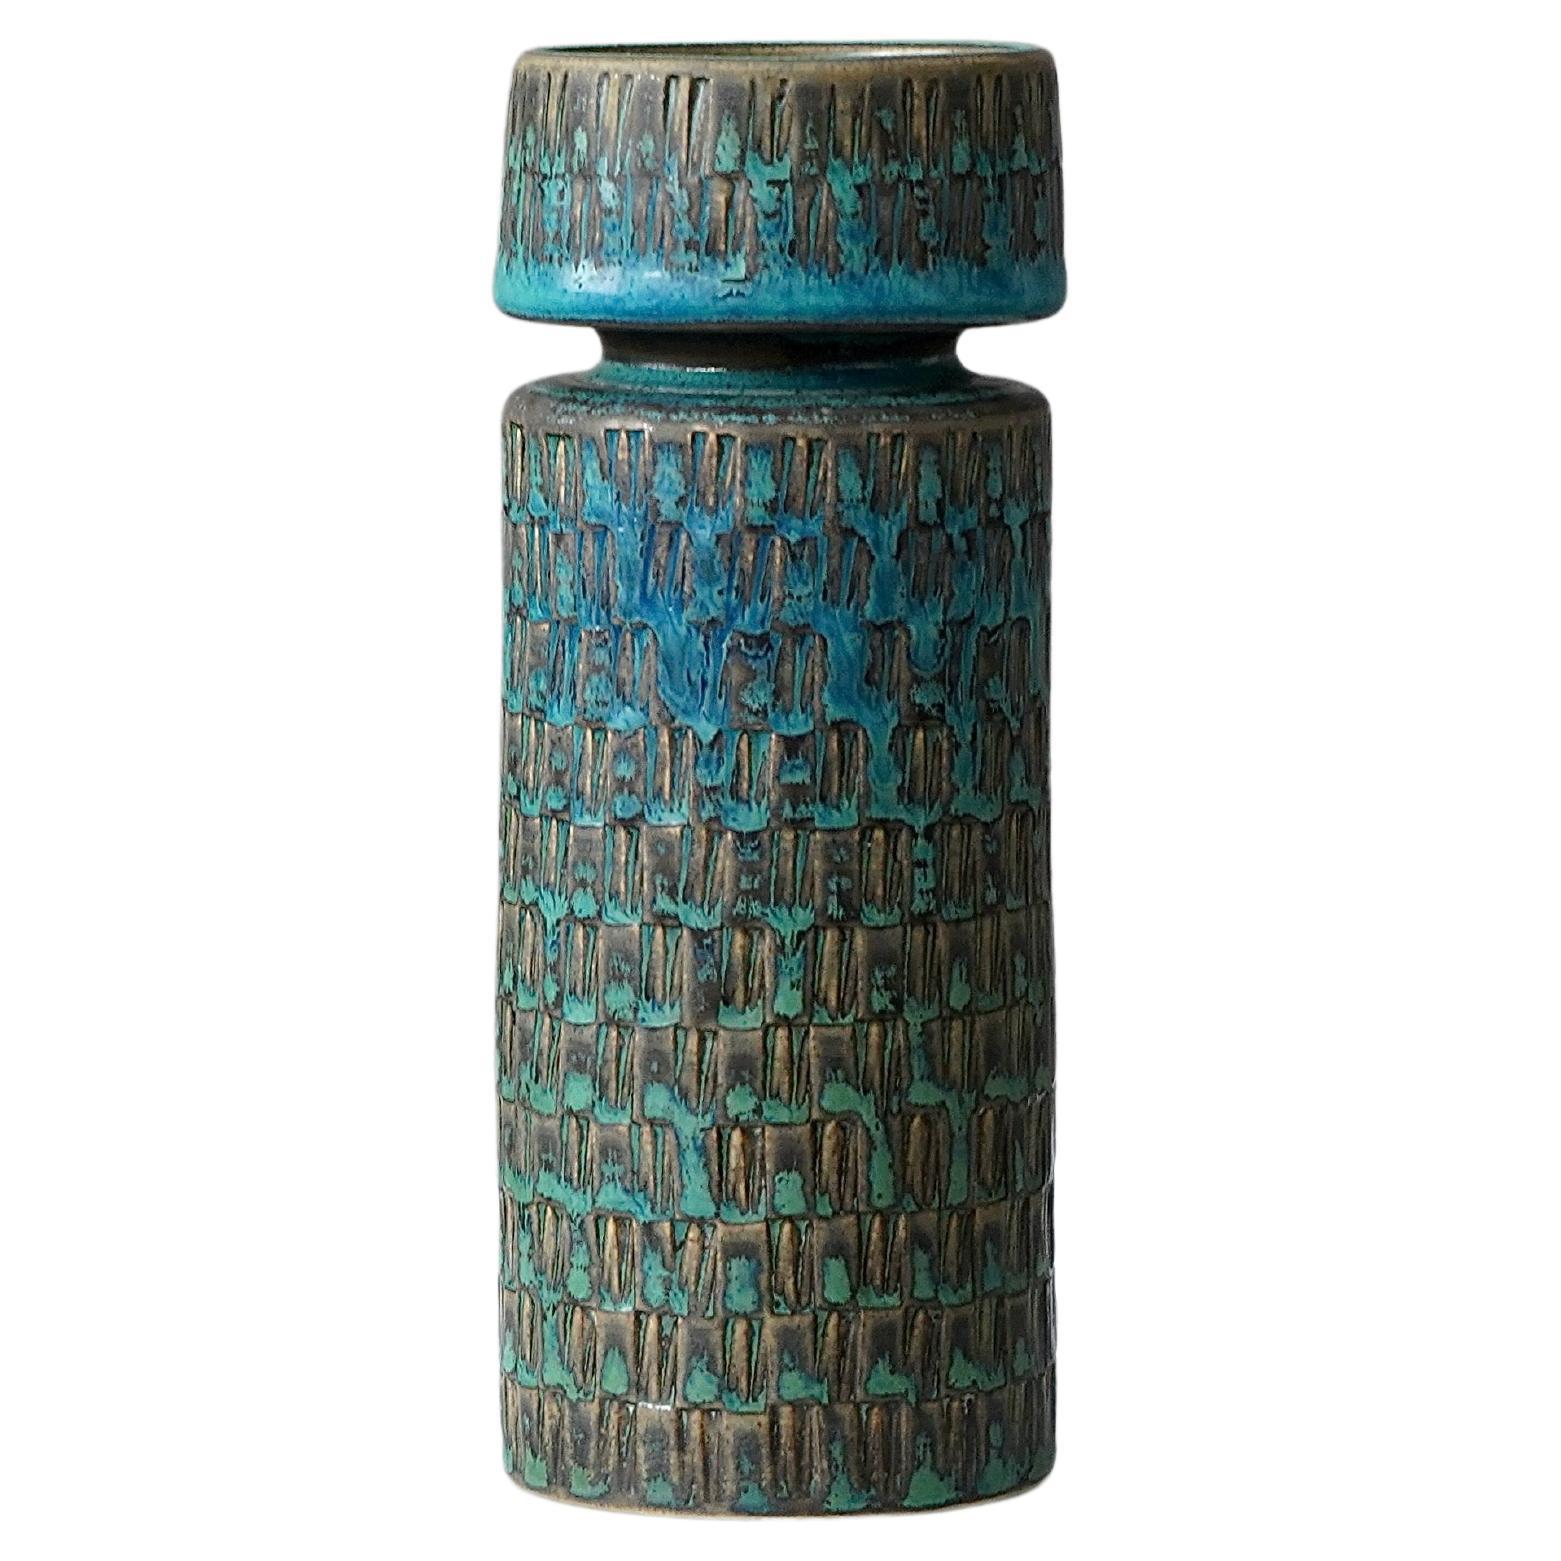 Unique Stoneware Vase by Stig Lindberg for Gustavsberg Studio, Sweden, 1962